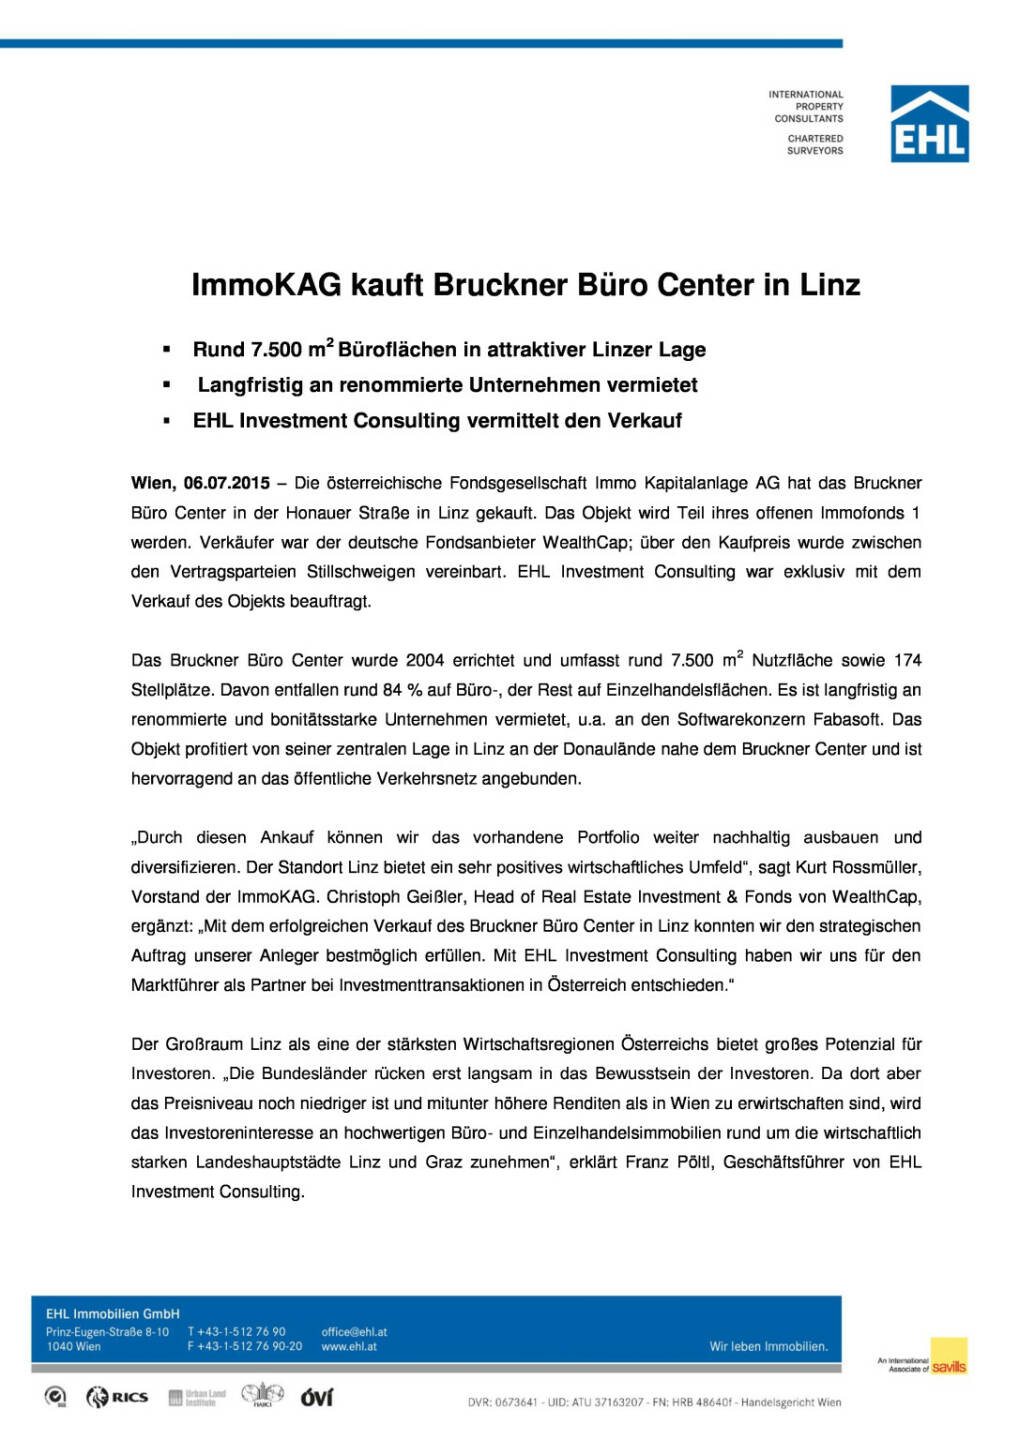 EHL Investment Consulting zum Verkauf des Bruckner Büro Centers in Linz an die ImmoKAG, Seite 1/2, komplettes Dokument unter http://boerse-social.com/static/uploads/file_205_ehl_immo_kag.pdf